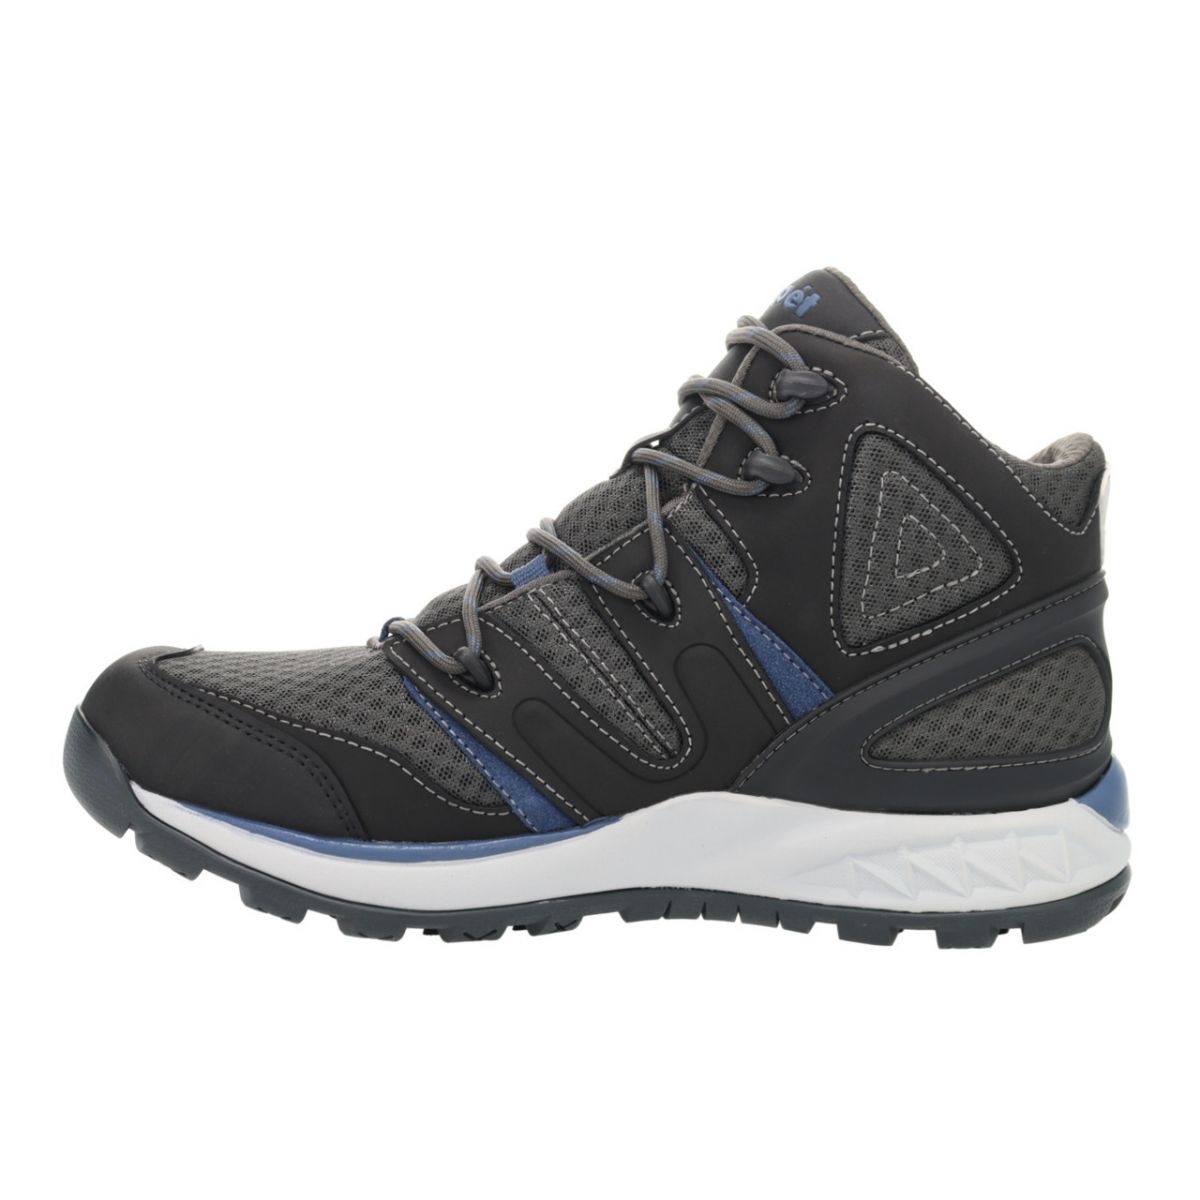 Propet Men's Veymont Waterproof Hiking Boot Grey/Blue - MOA022SGRB GREY/BLUE - GREY/BLUE, 10.5 XX-Wide